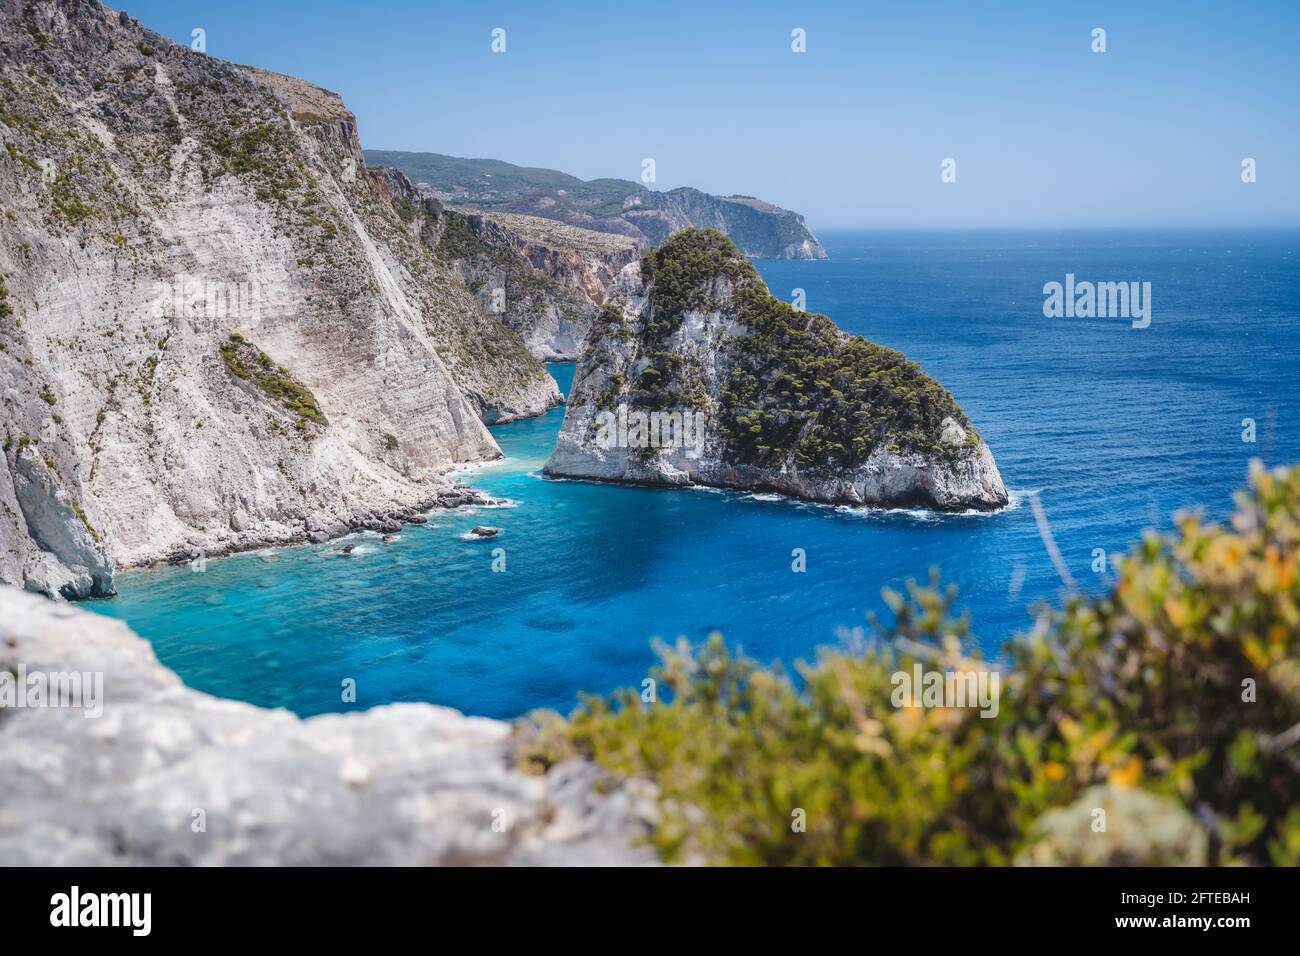 Plakaki Rocks in Ionian Sea - Agalas, Zakynthos Island, Greece Stock Photo  - Alamy